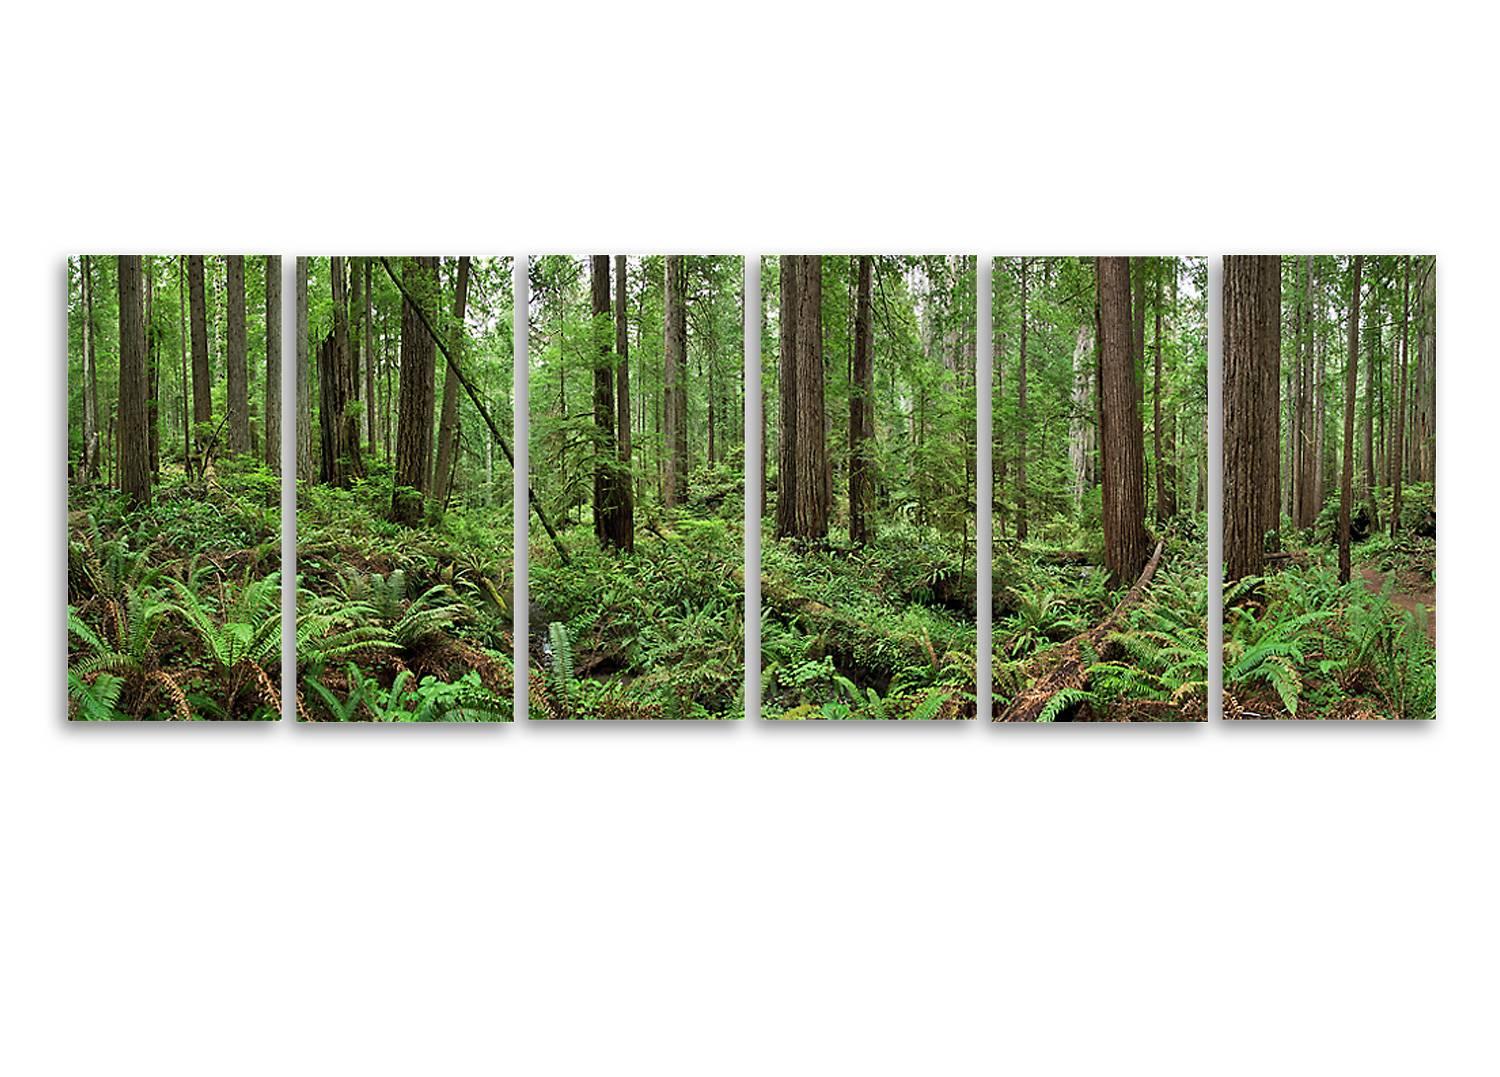 Erik Pawassar Color Photograph - Redwoods - large format nature observation in six individual photograph 